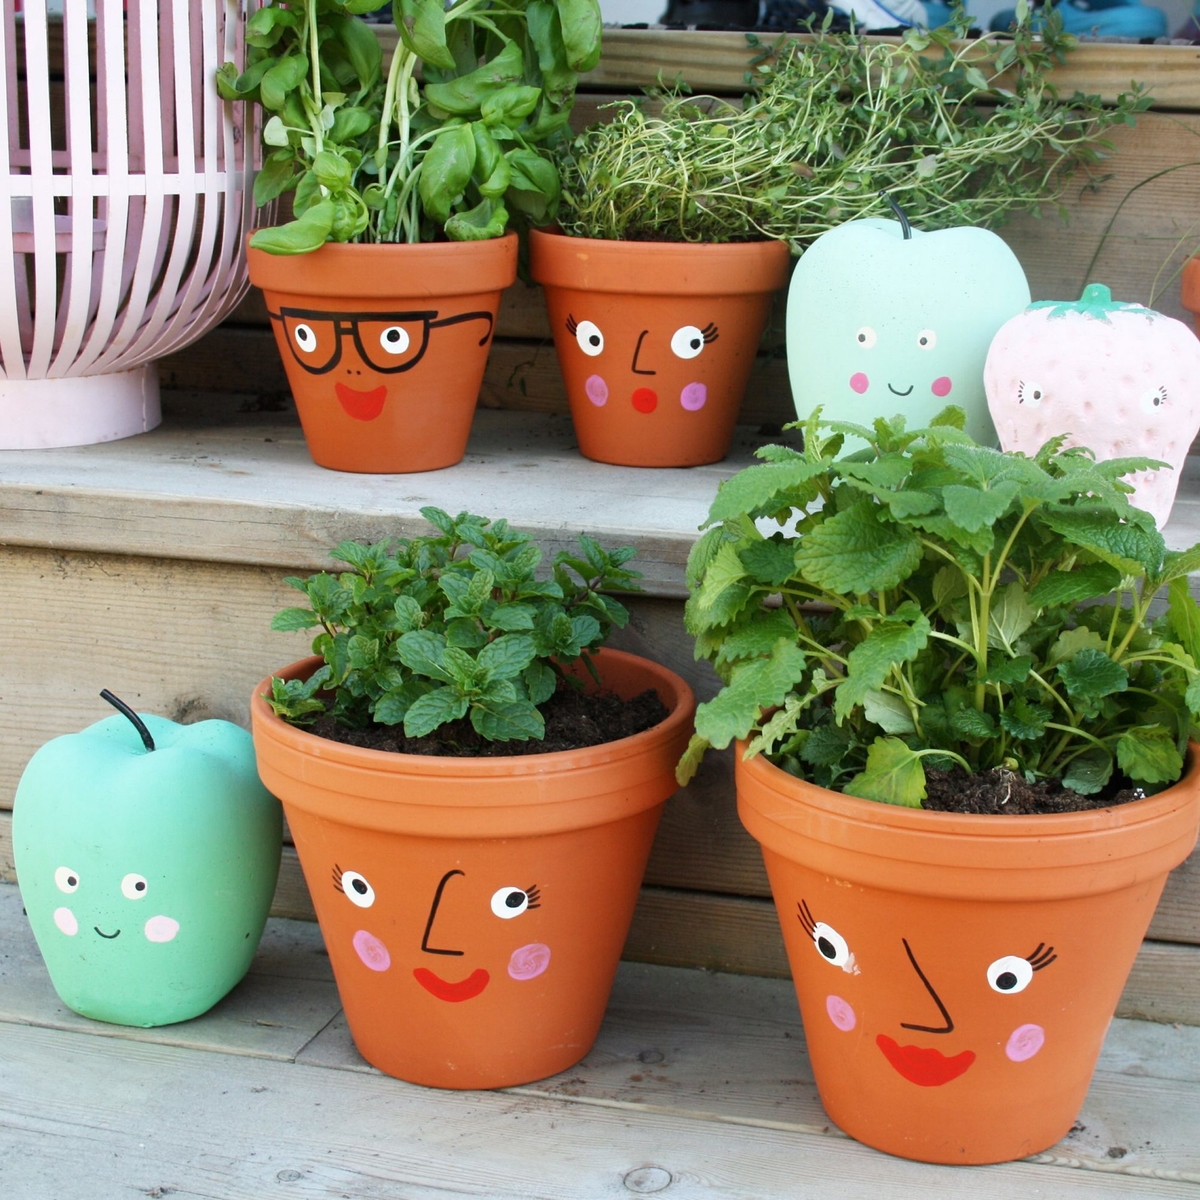 Joyful planter pots